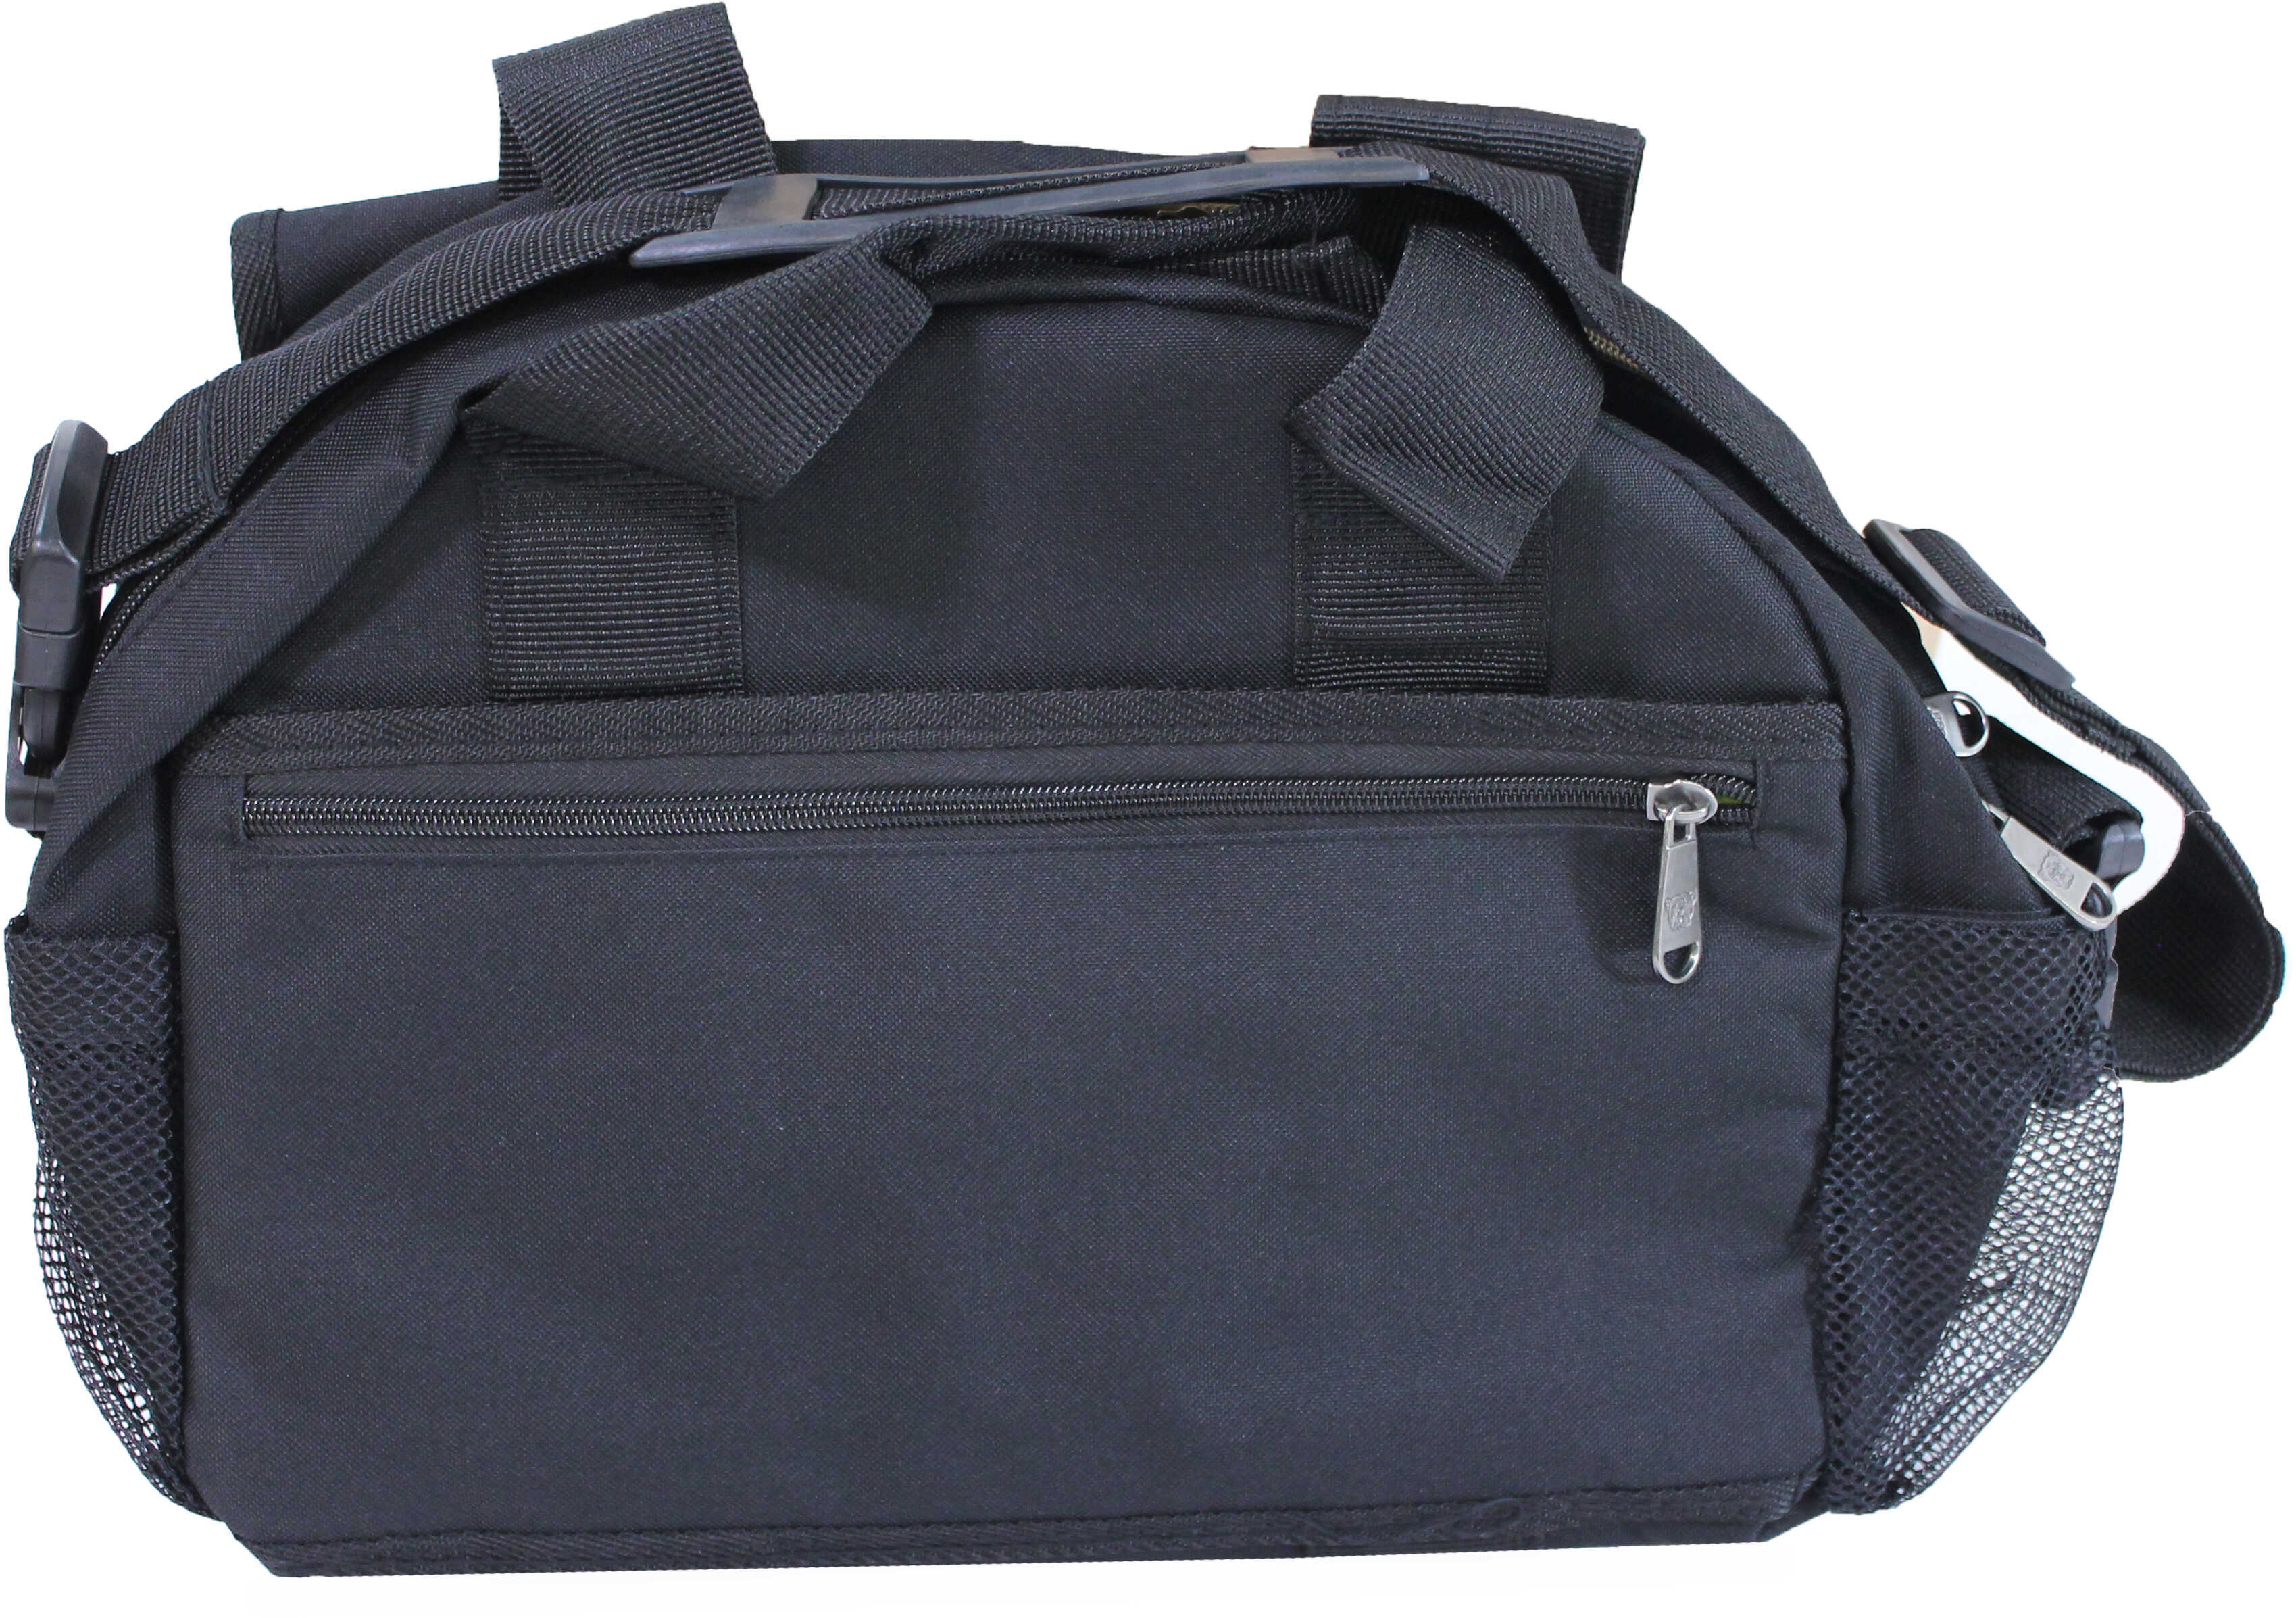 Bulldog Cases Tactical Range Bag W/ MOLLE Mag Pouches Black